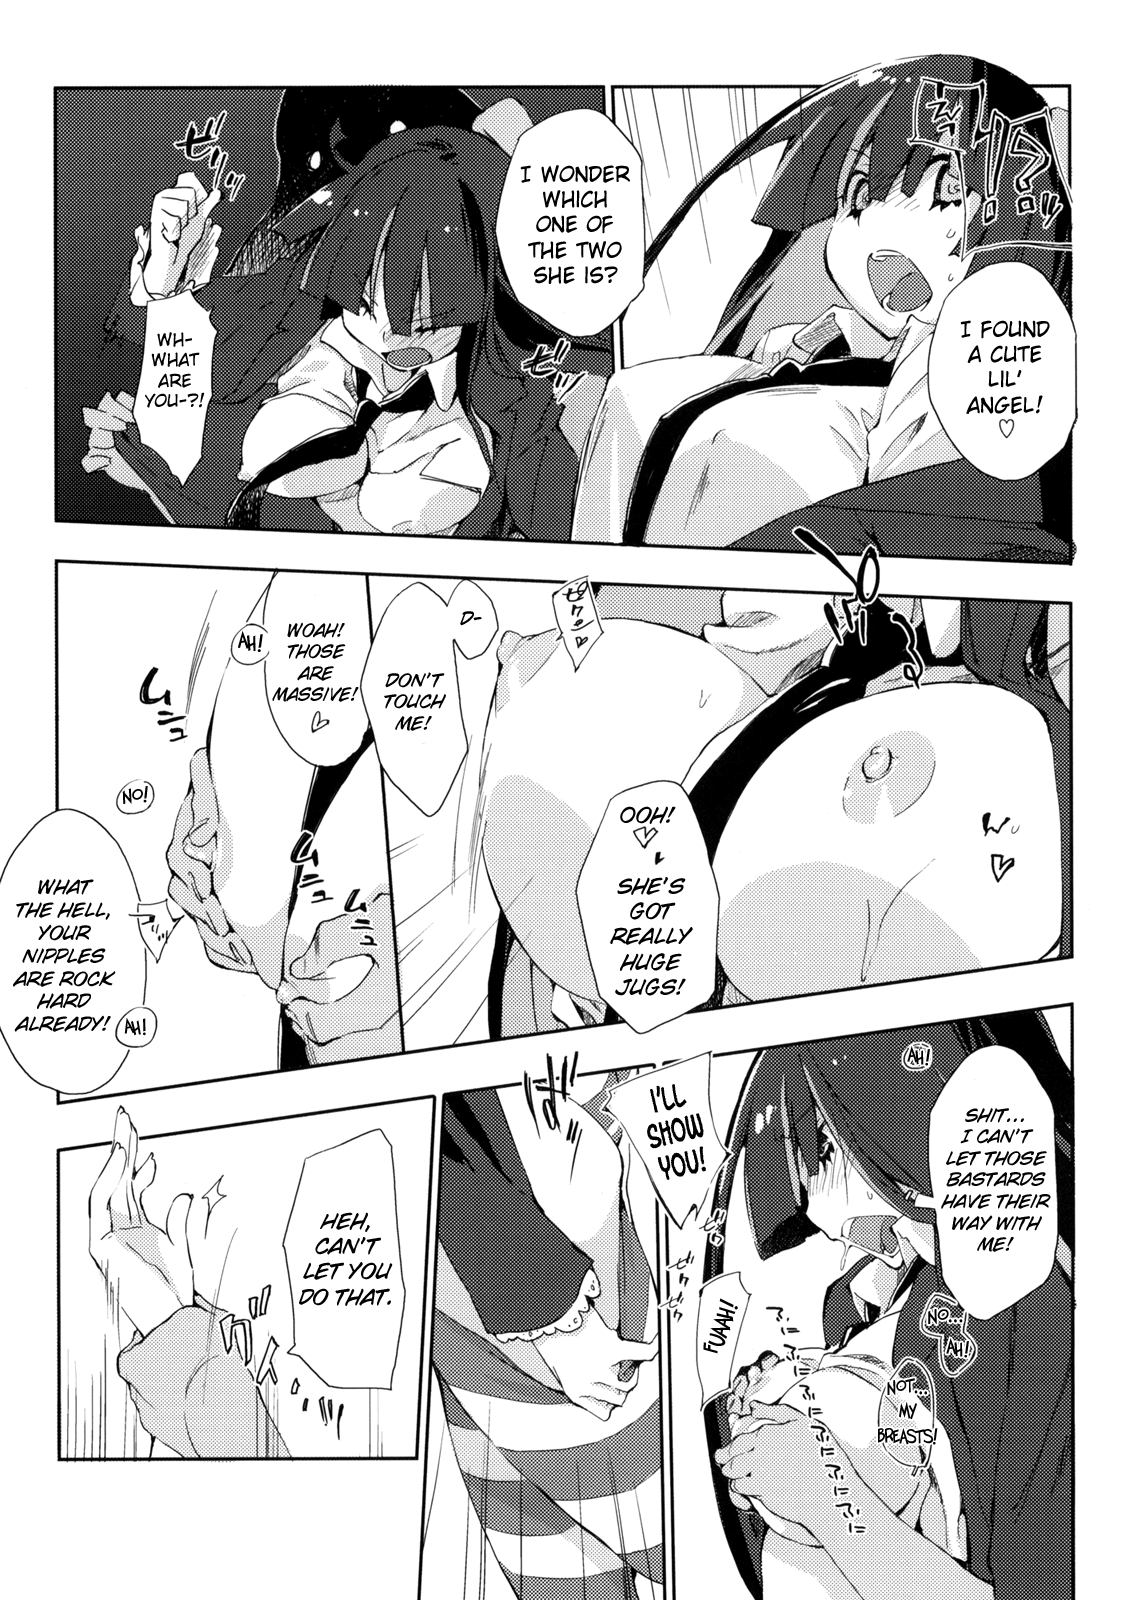 inmoral unmoral hentai manga picture 5